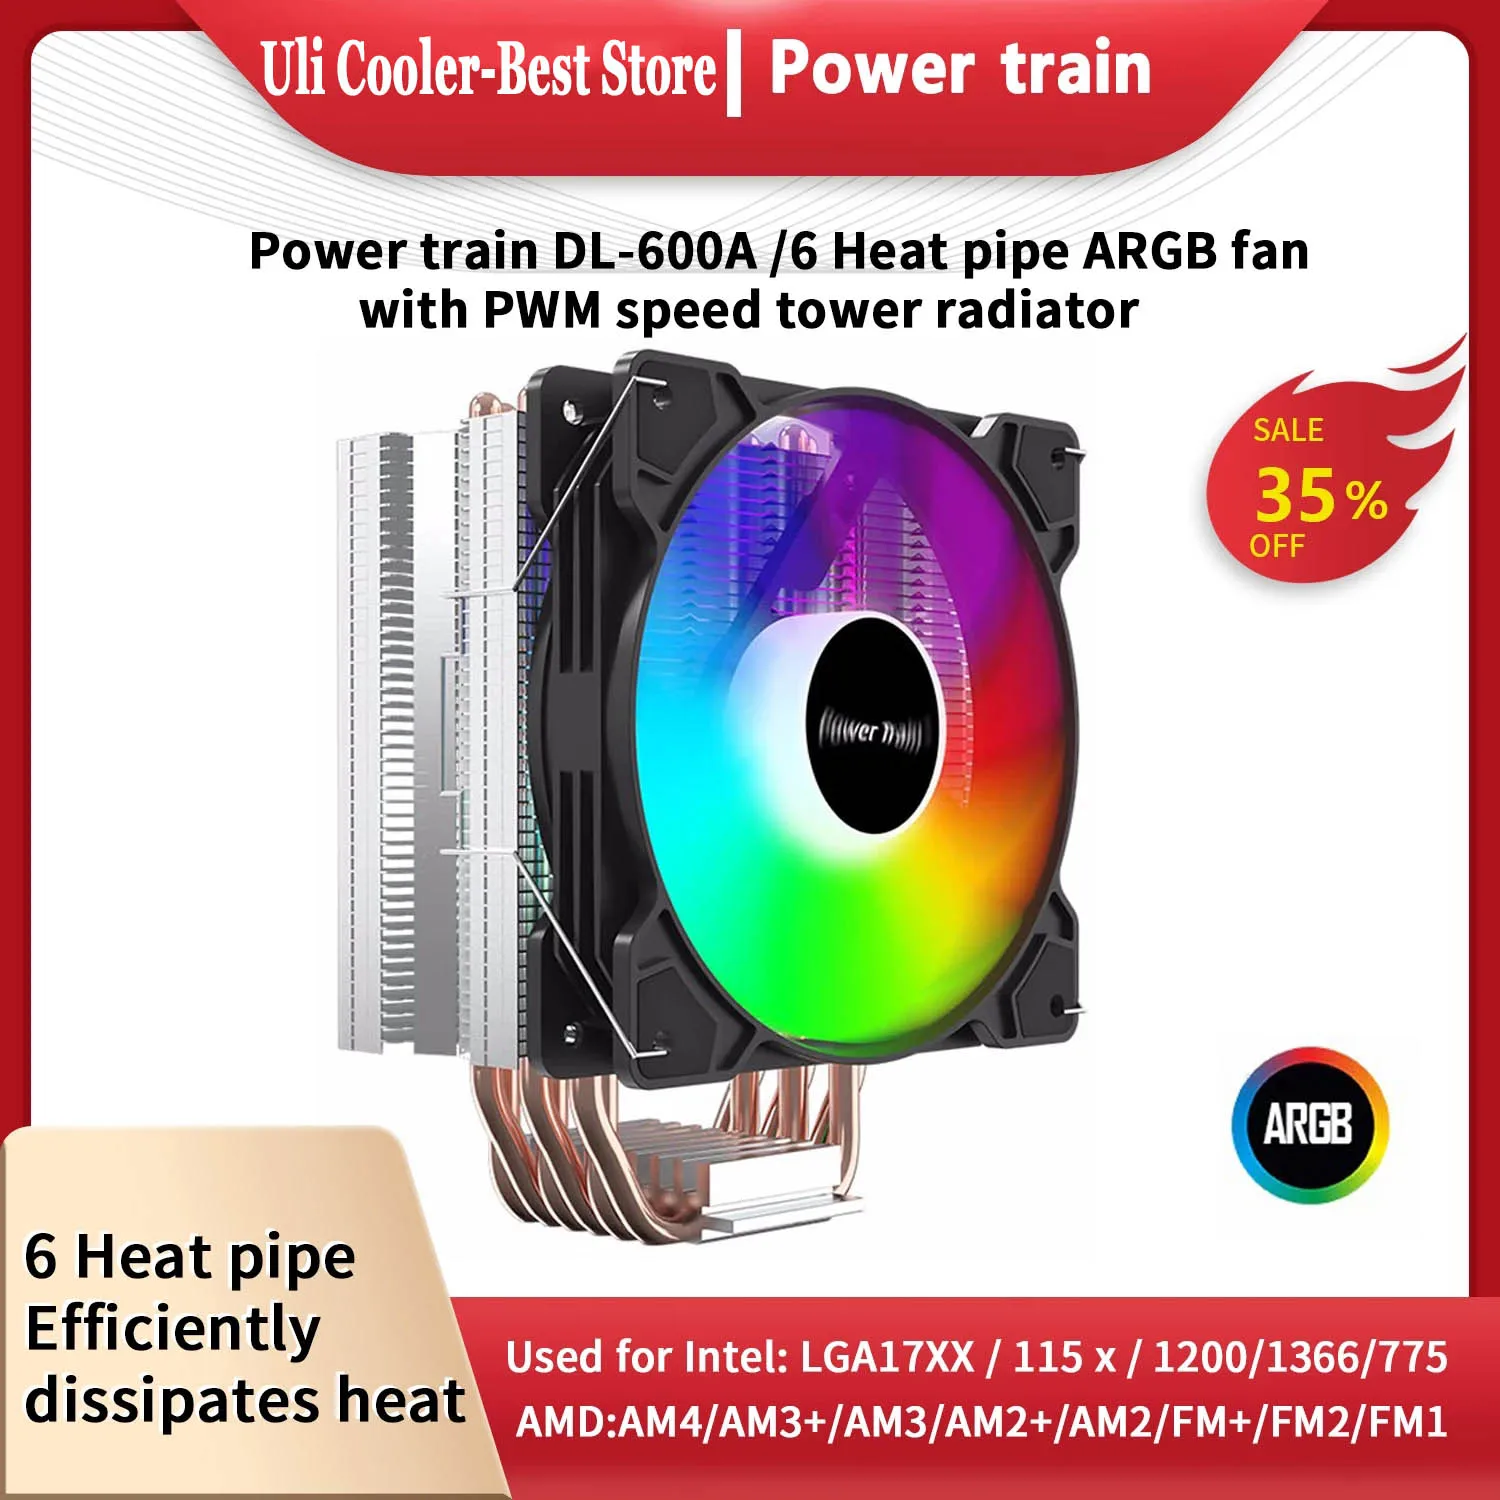 

Power train DL-600A Radiator ARGB 6 Heat Pipe Copper 12 Generation PWM CPU Air Cooler Intel LGA1700 1366 115X 1200 775 AMD AM4